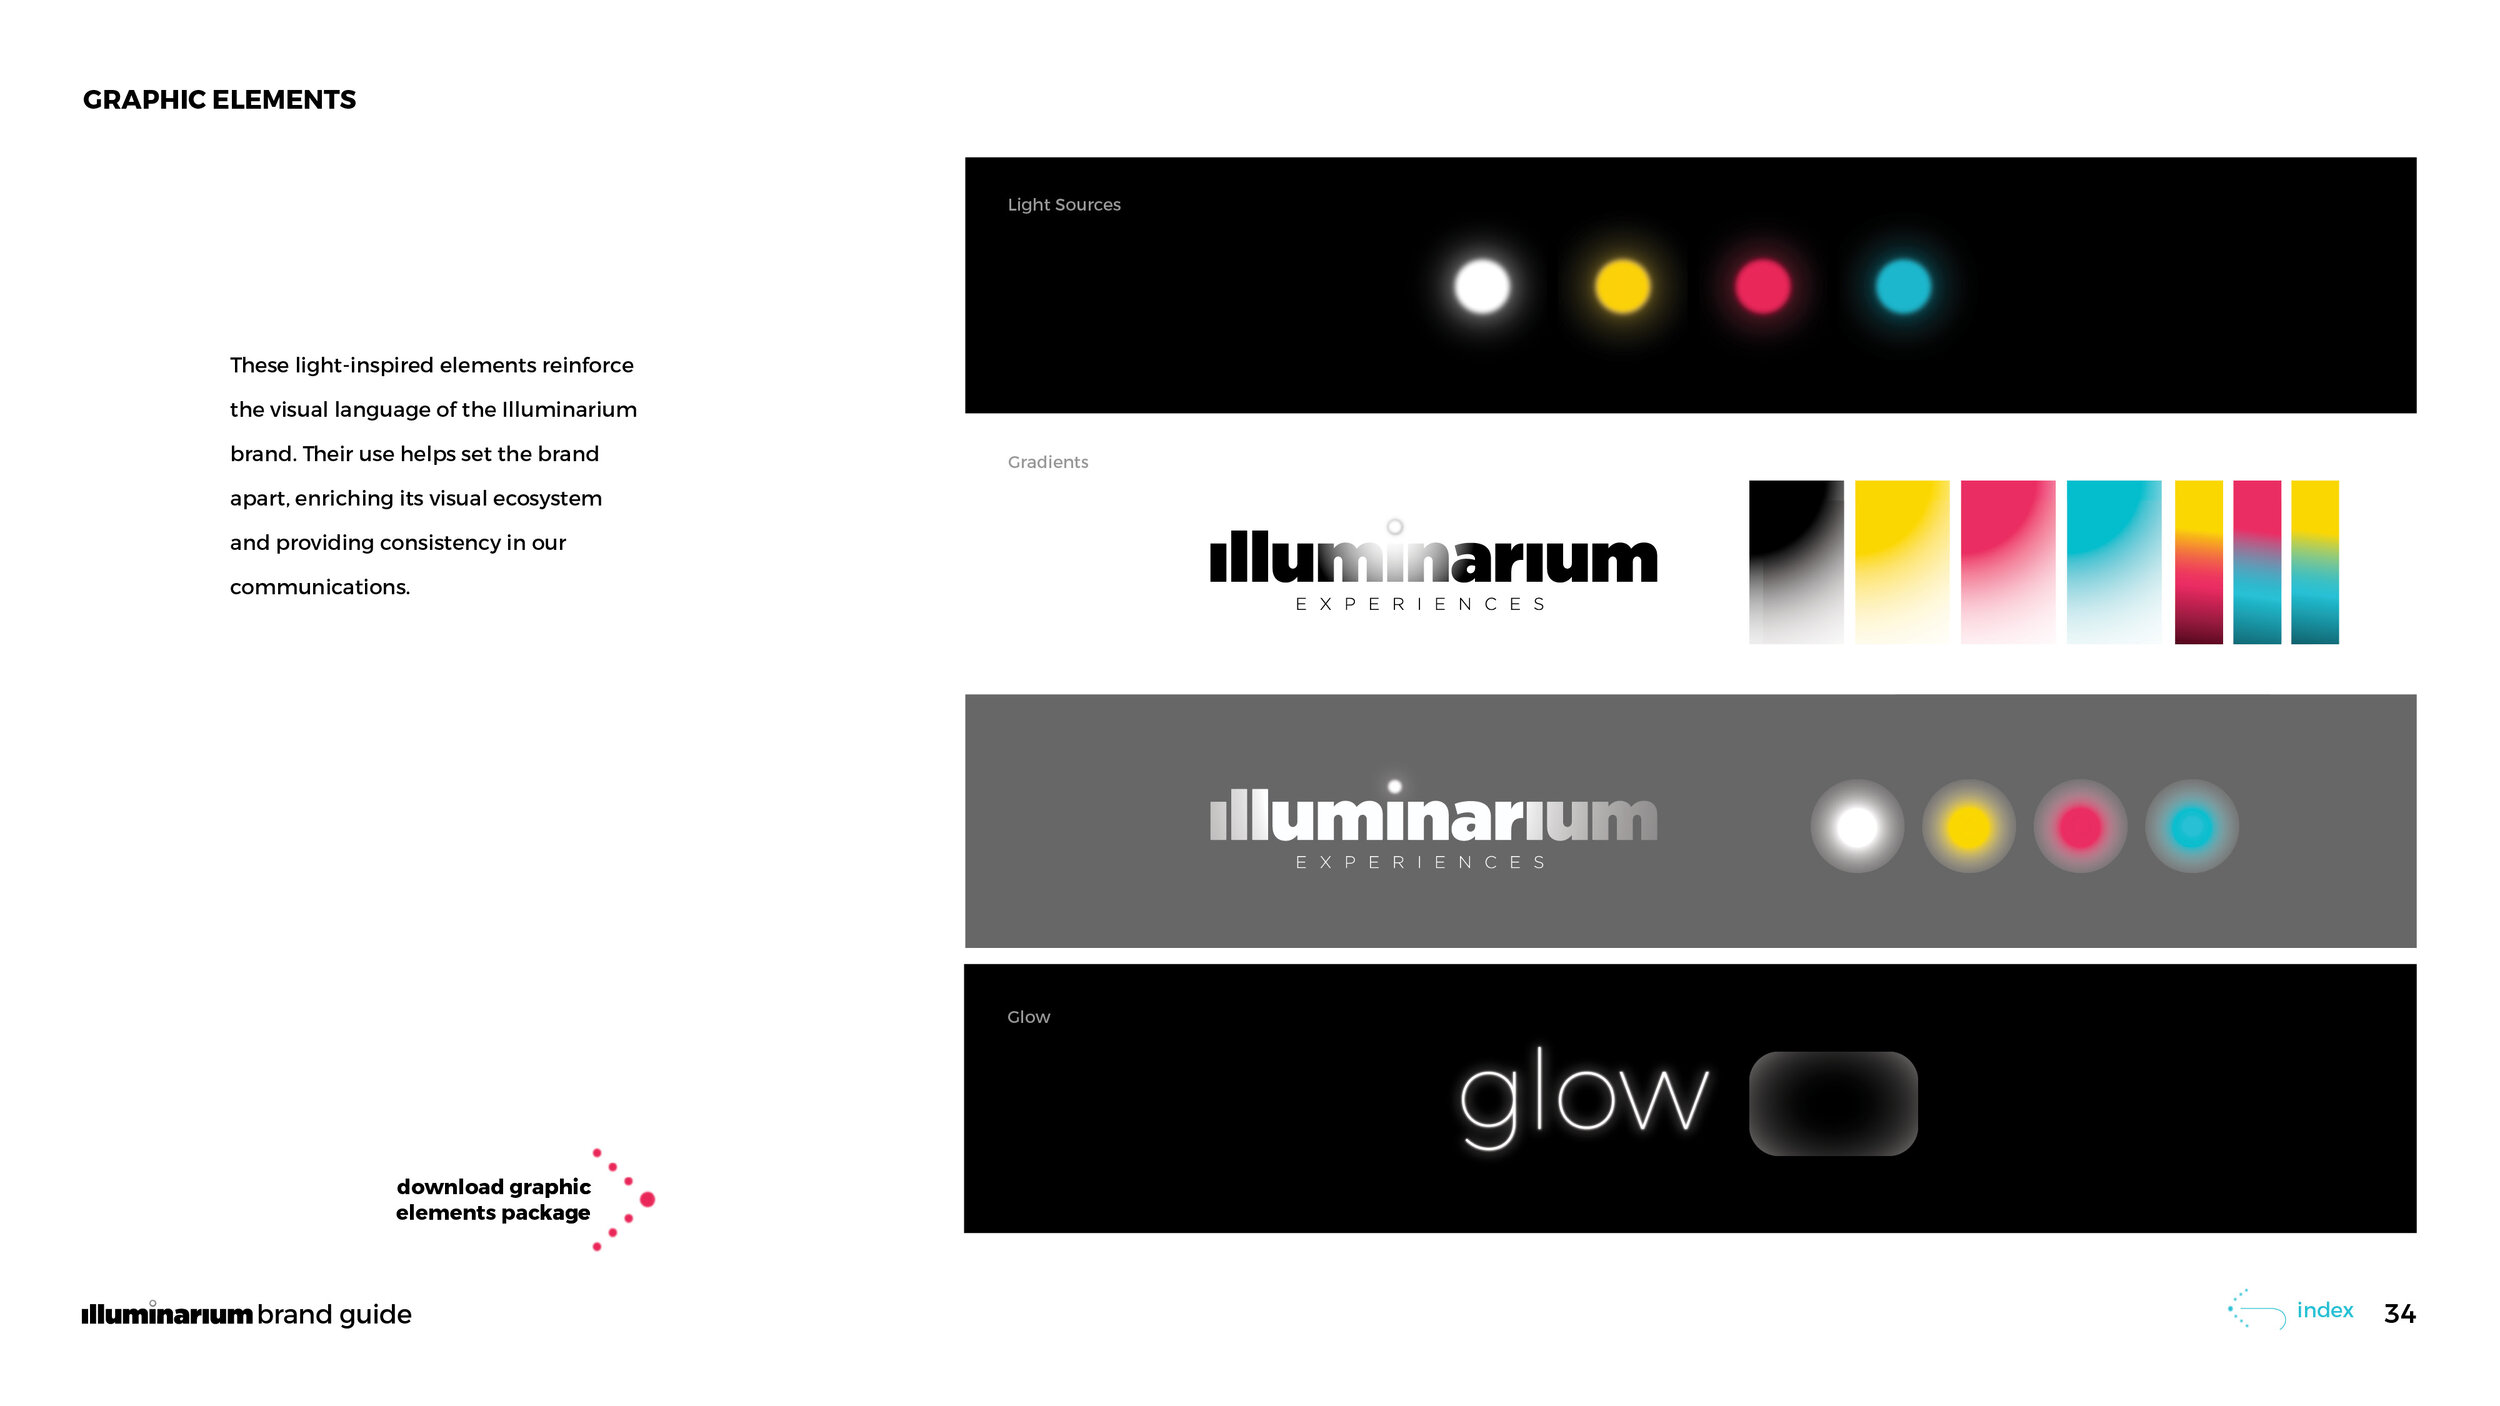 illuminarium_brand guide_16:9_May2020GD_final34.jpg